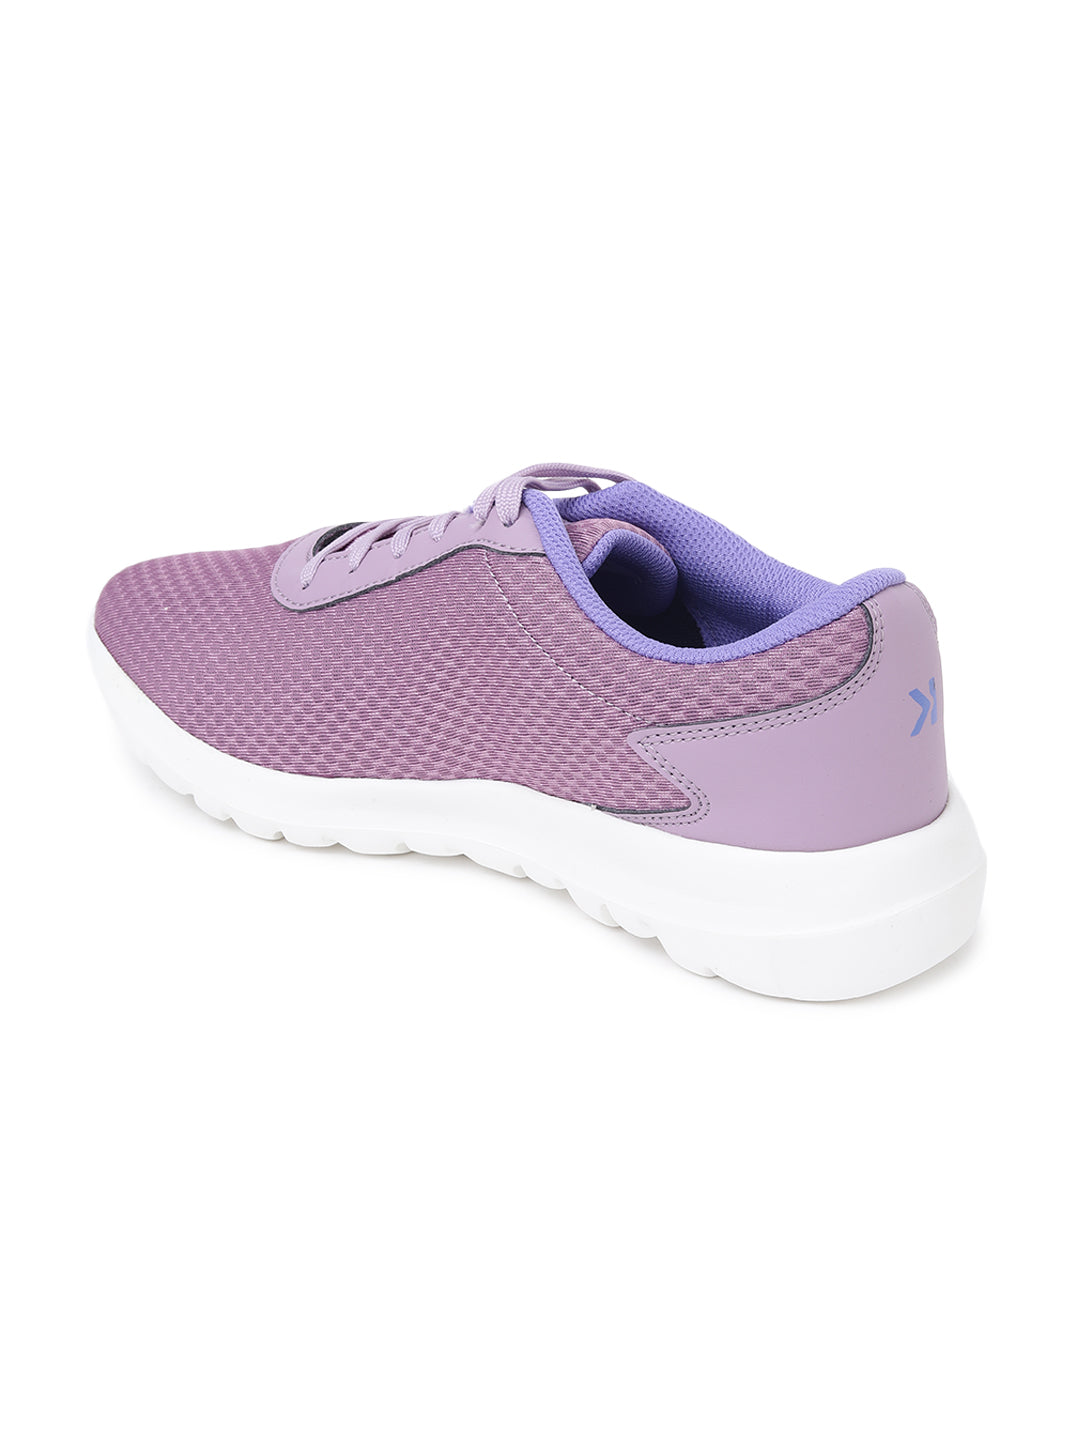 Eeken Lightweight Lavender Casual Outdoor Shoes For Women